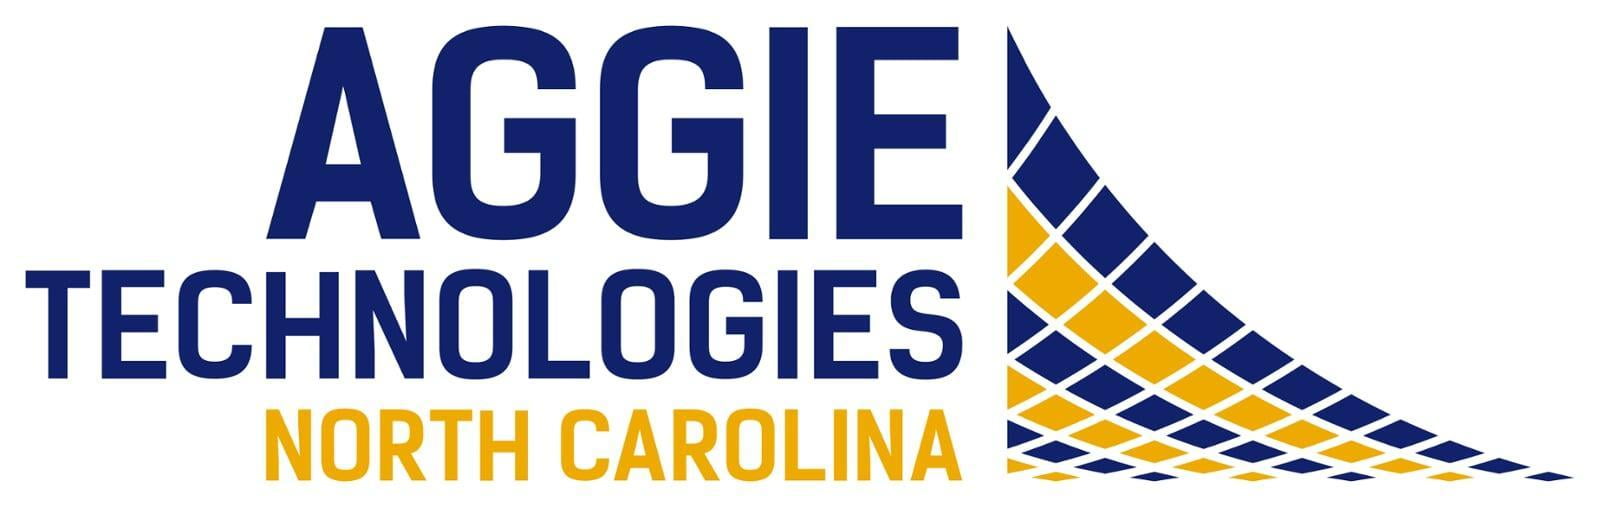 Aggie Technologies